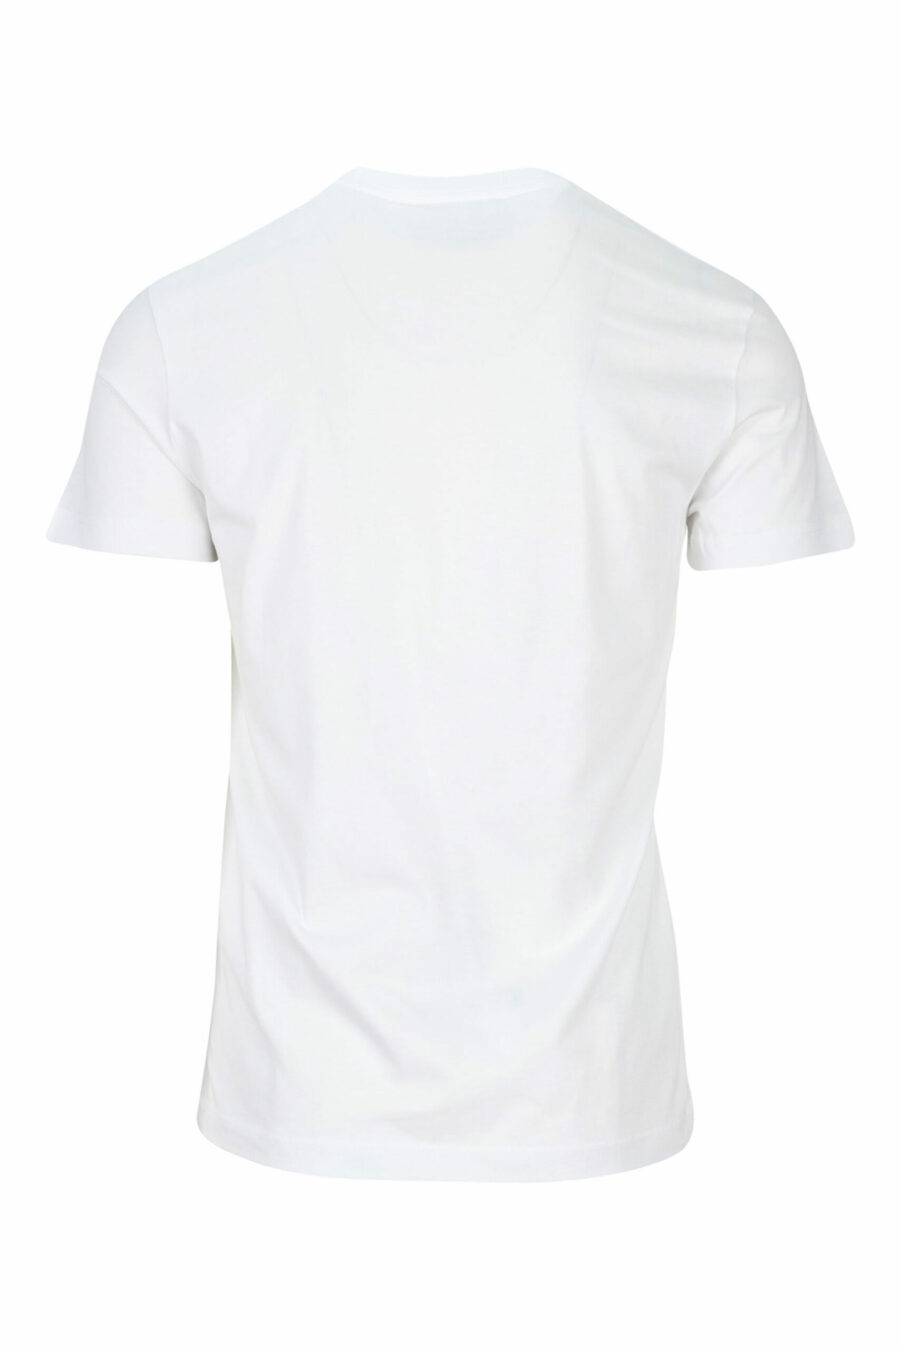 Weißes T-Shirt mit silbernem "Stückzahl"-Minilog - 8052019456936 1 skaliert